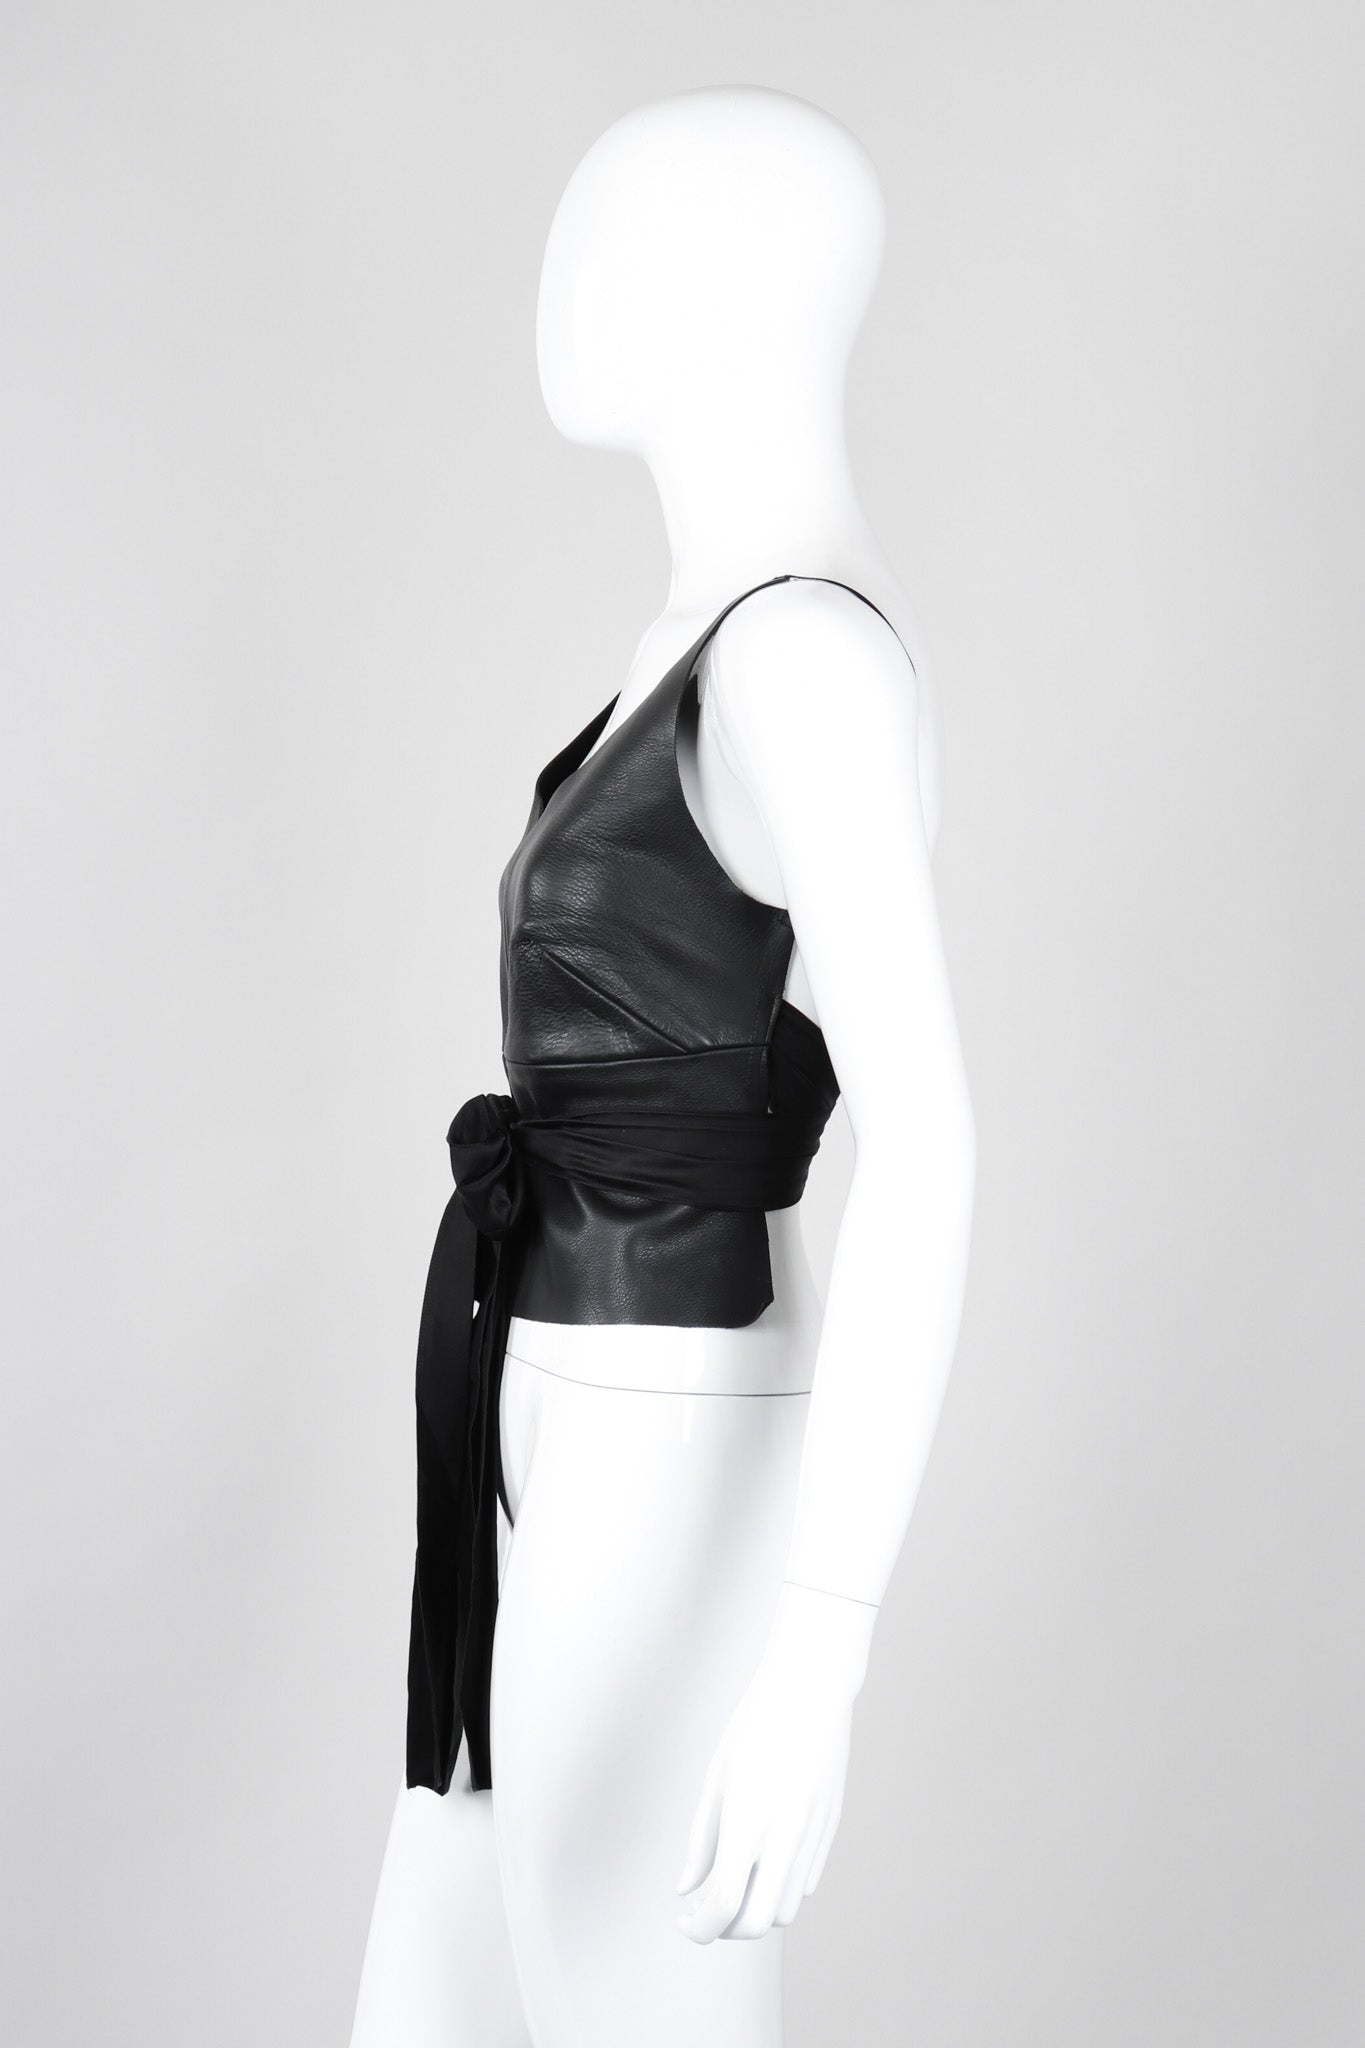 Recess Los Angeles Vintage Elisabetta Rogiani Leather Tie-Back Backless Camisole